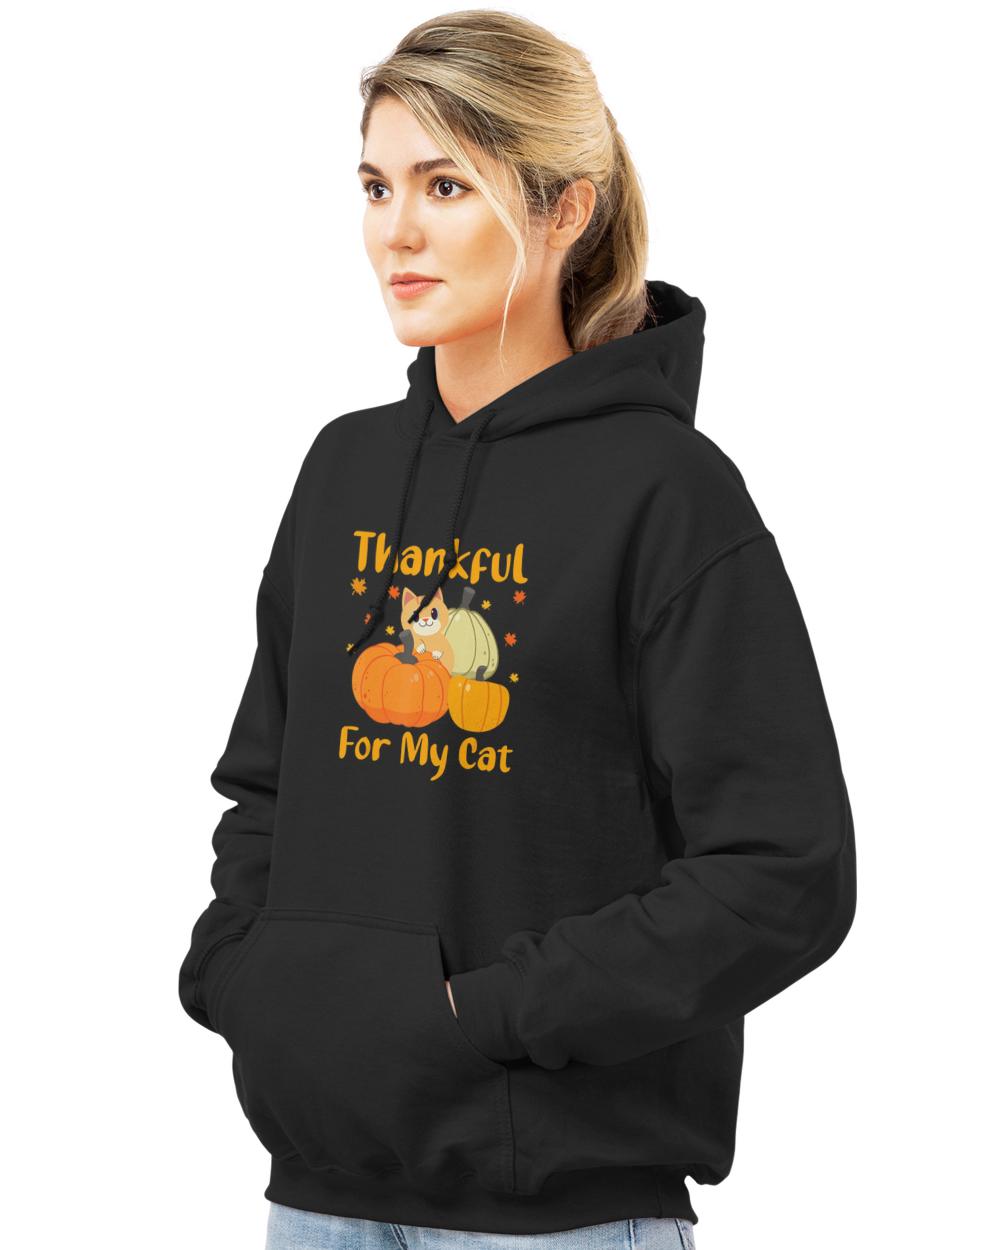 Turkey Lover Thankful For Cat Thanksgiving T-Shirt